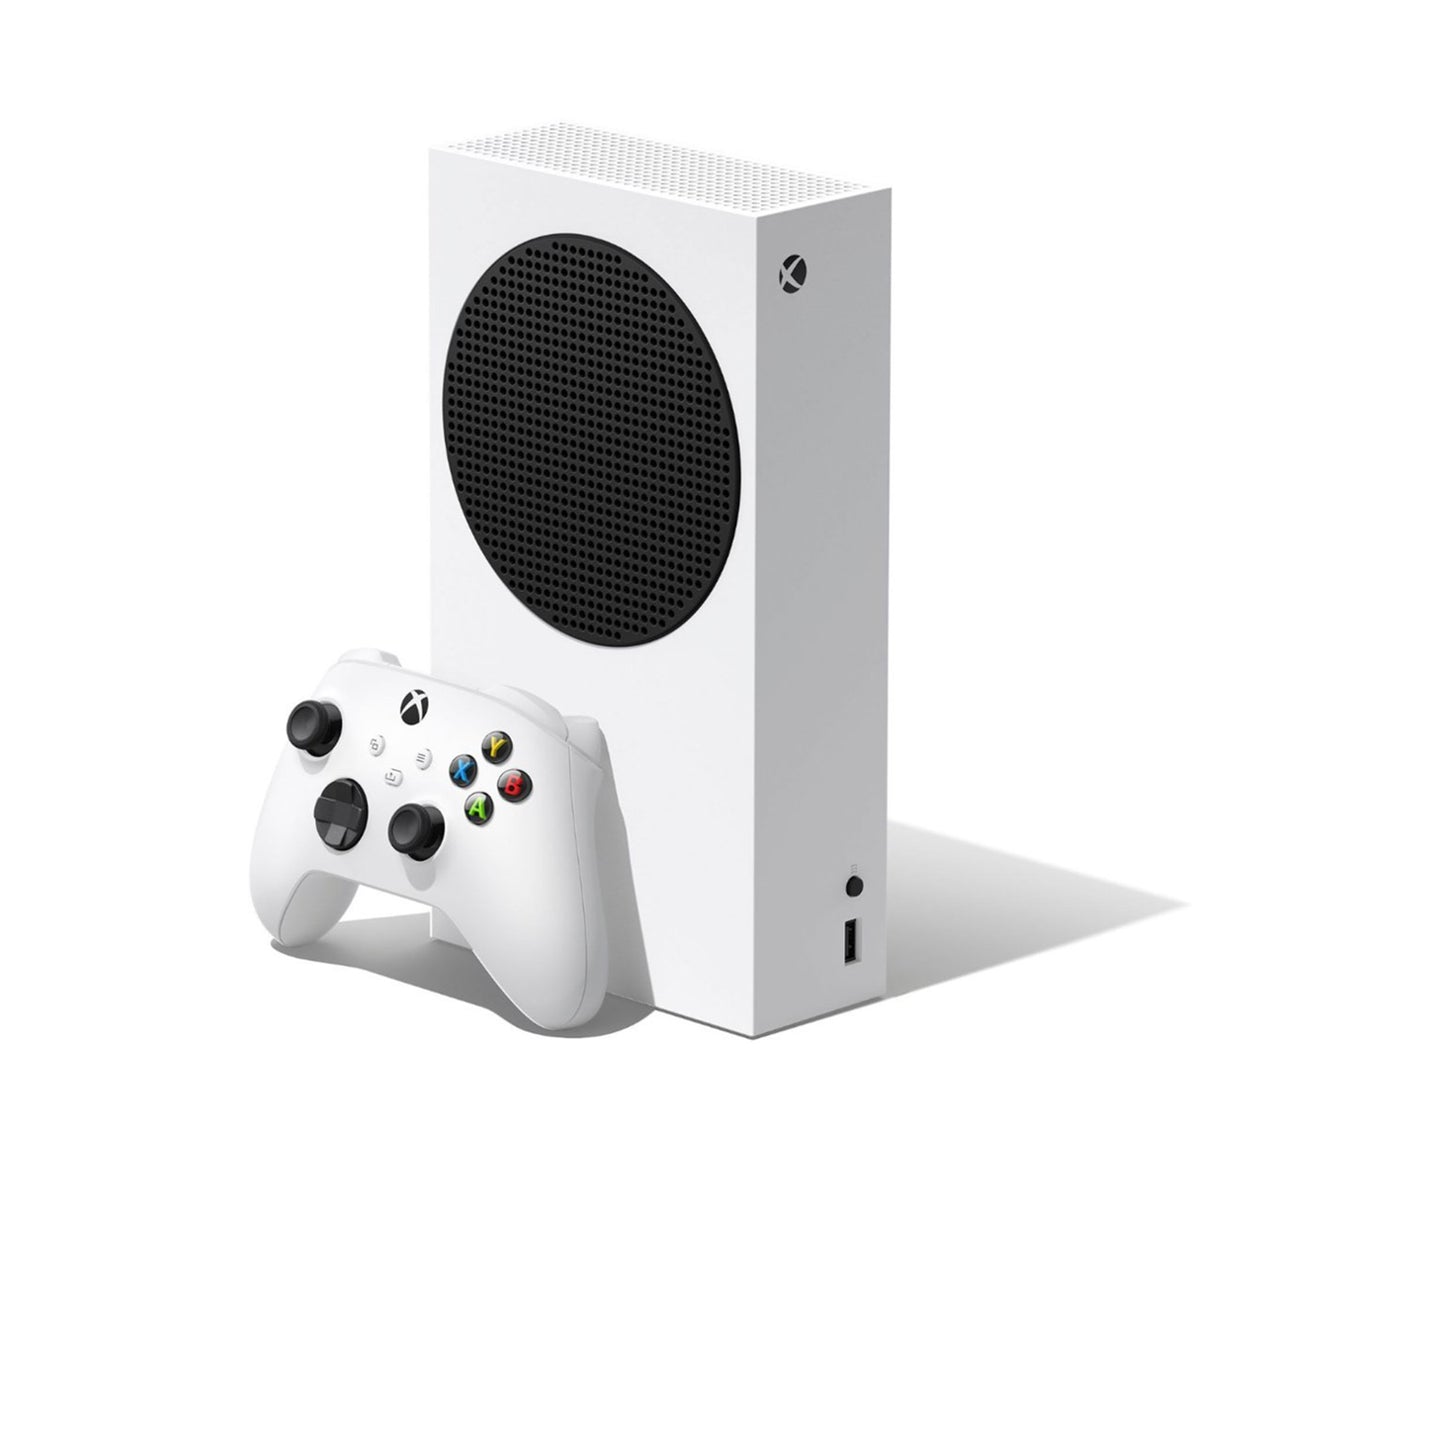 Microsoft - وحدة تحكم Xbox Series S سعة 512 جيجابايت رقمية بالكامل (ألعاب خالية من الأقراص) - أبيض 